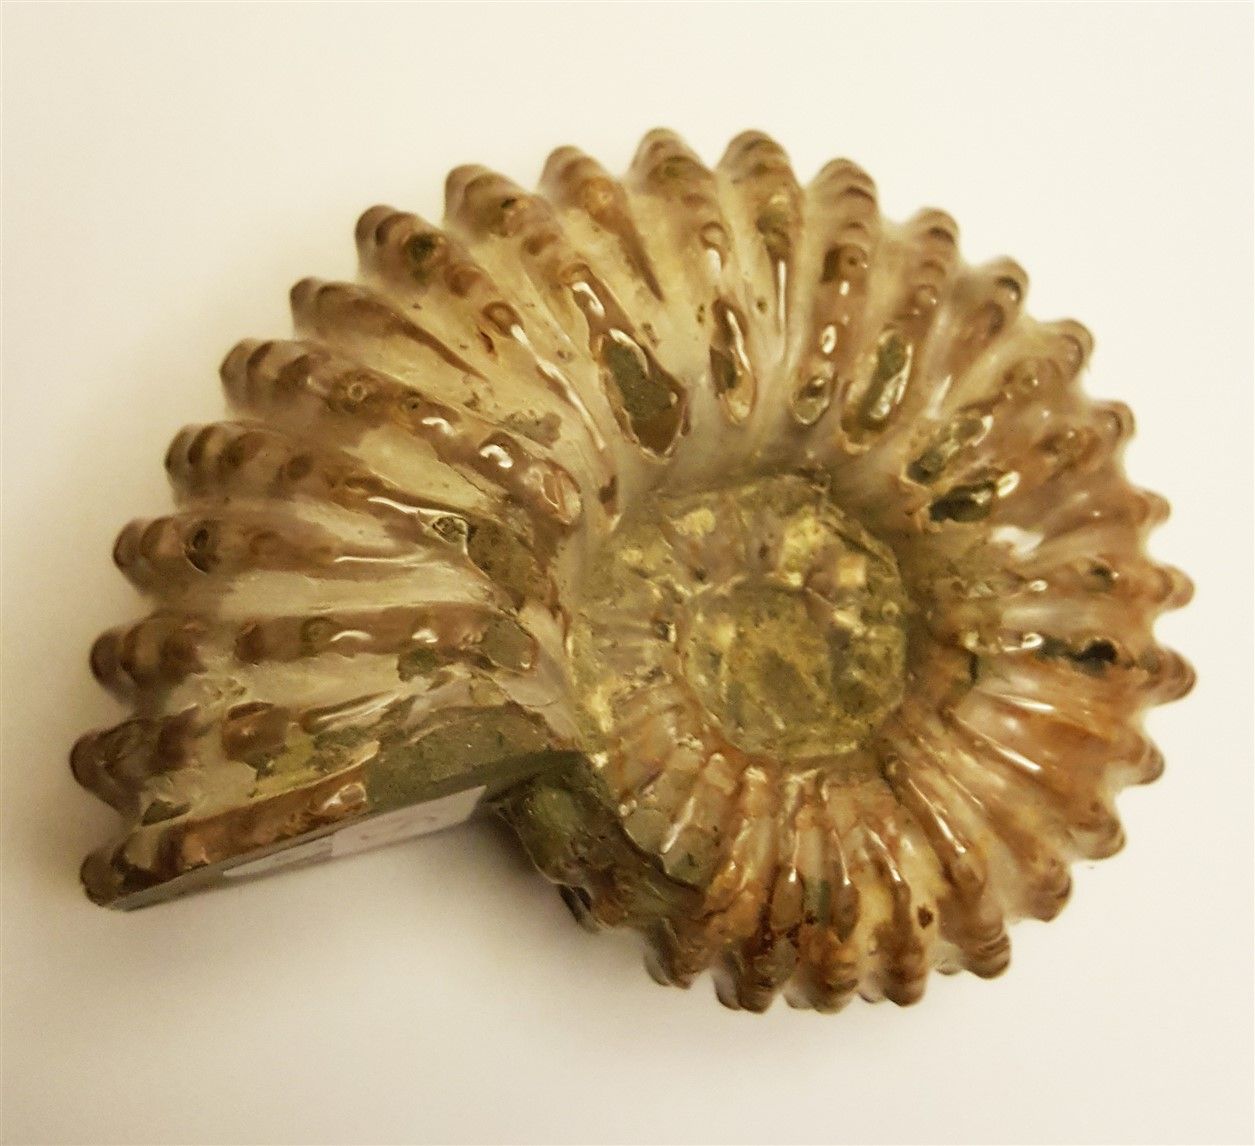 Null Ganzer Perlmutt-Ammonit aus Mahajanga, Madagaskar.

Kreidezeit 80-100 Milli&hellip;